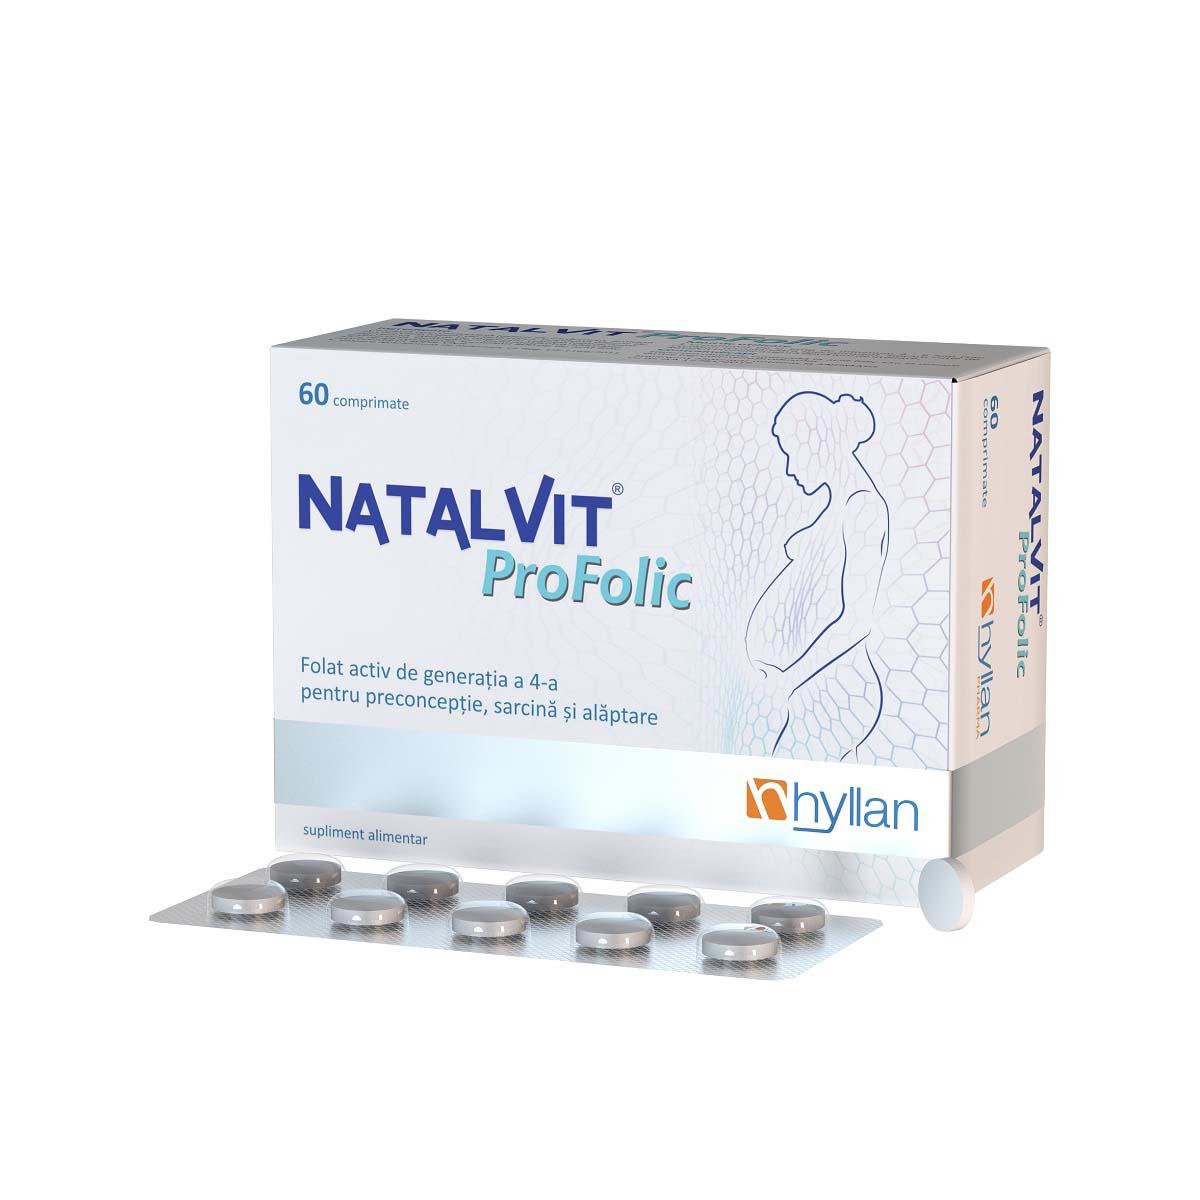 Natalvit Profolic 60 comprimate Hyllan